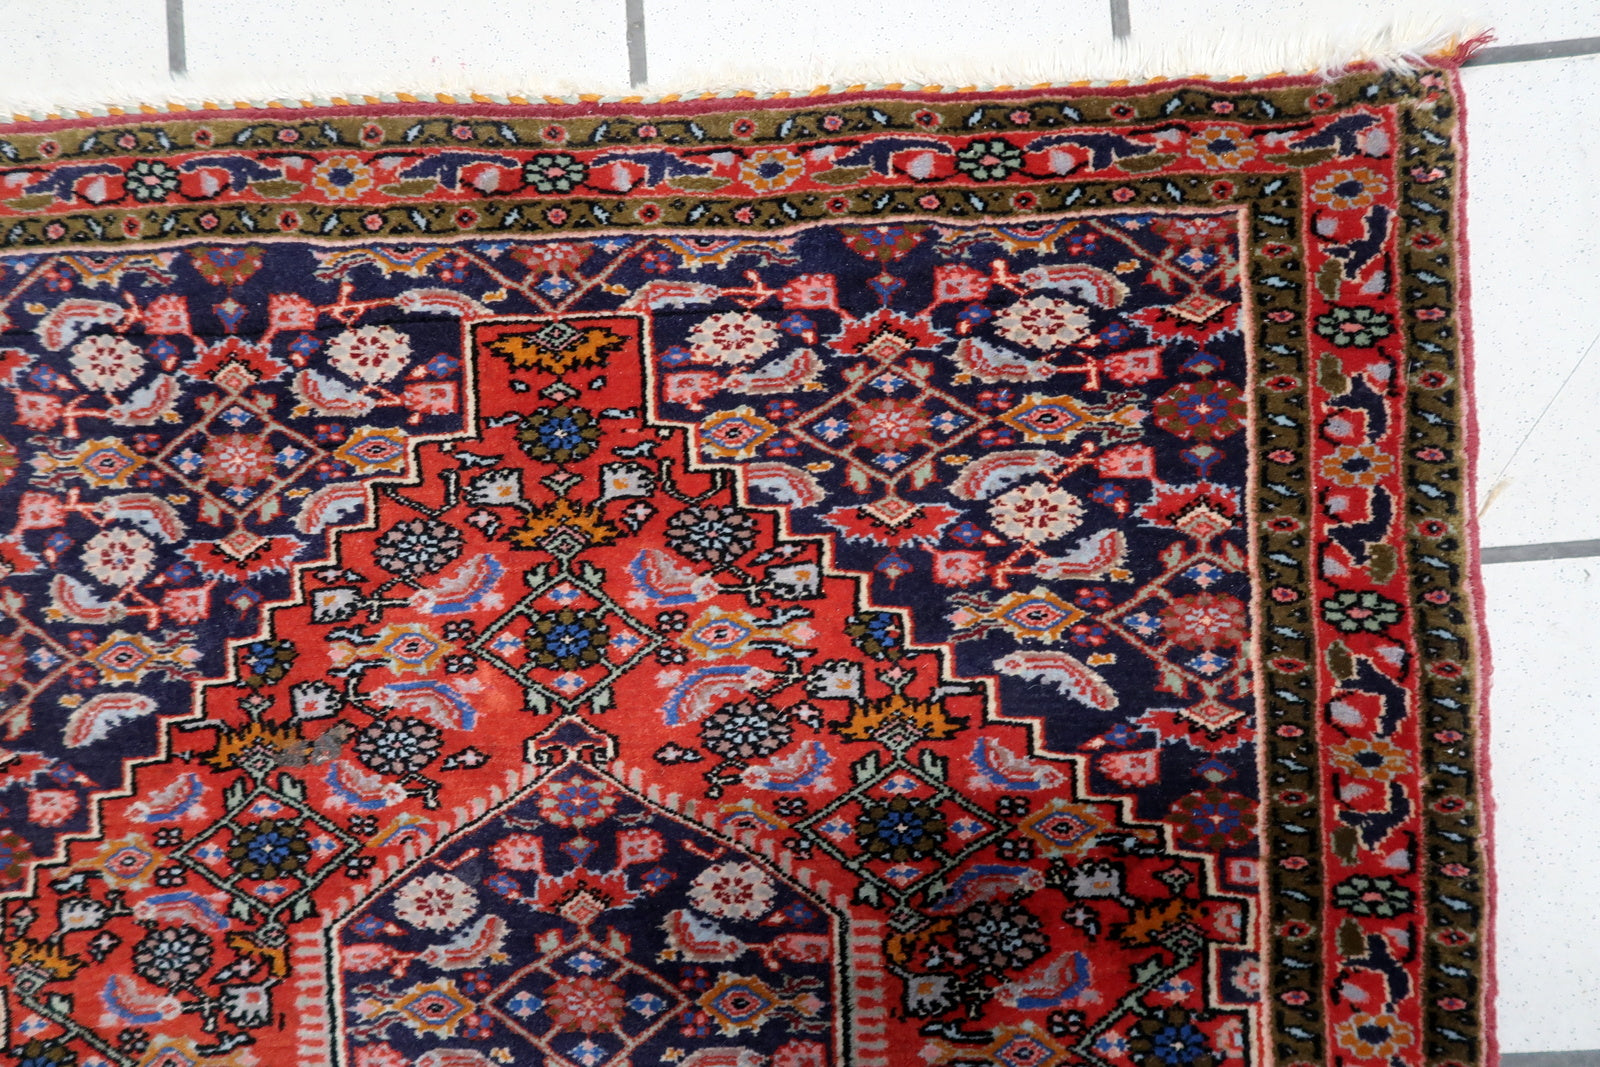 Close-Up Detail - Intricate Tabriz Patterns